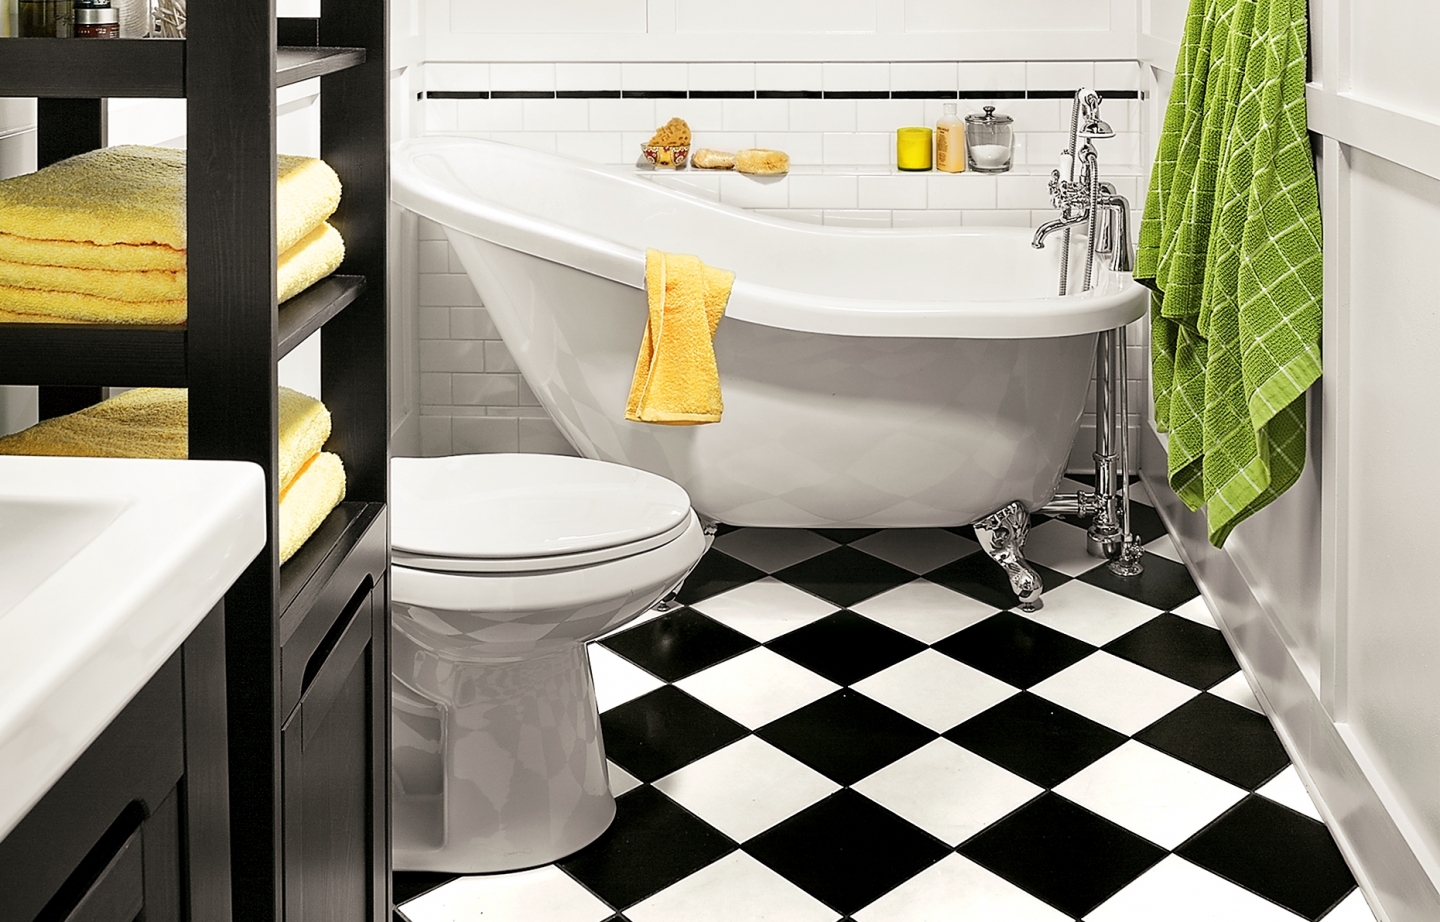 A-diagonal-checkerboard-floor-expands-the-bathroom